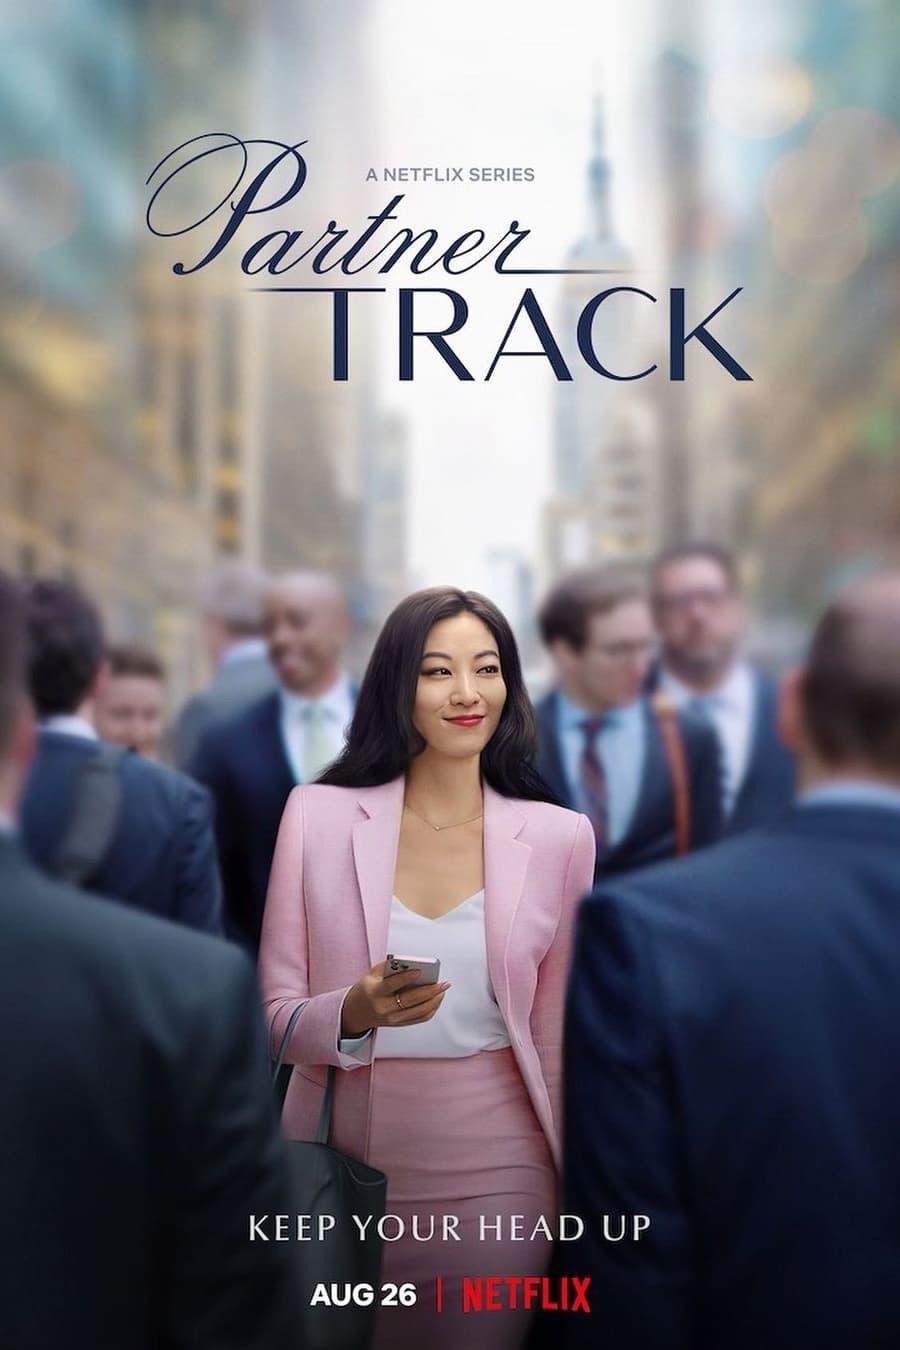 Partner Track poster